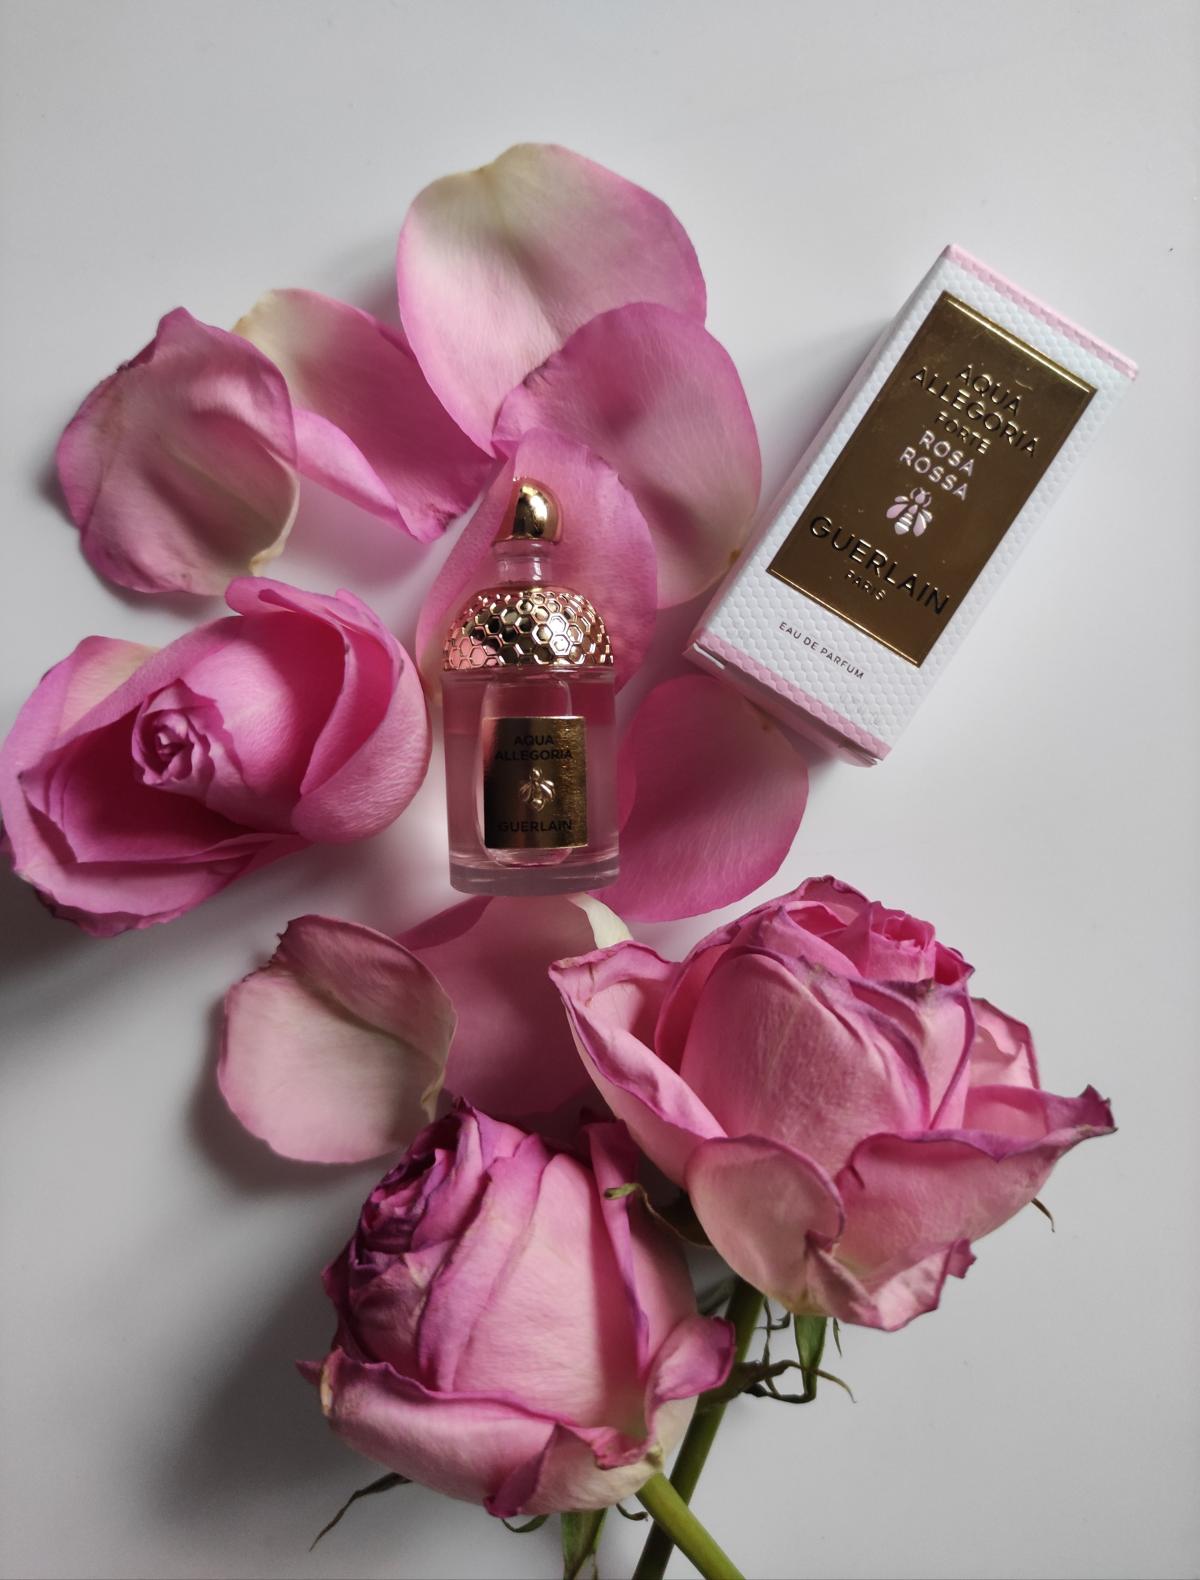 Aqua Allegoria Forte Rosa Rossa Guerlain perfume - a new fragrance for ...